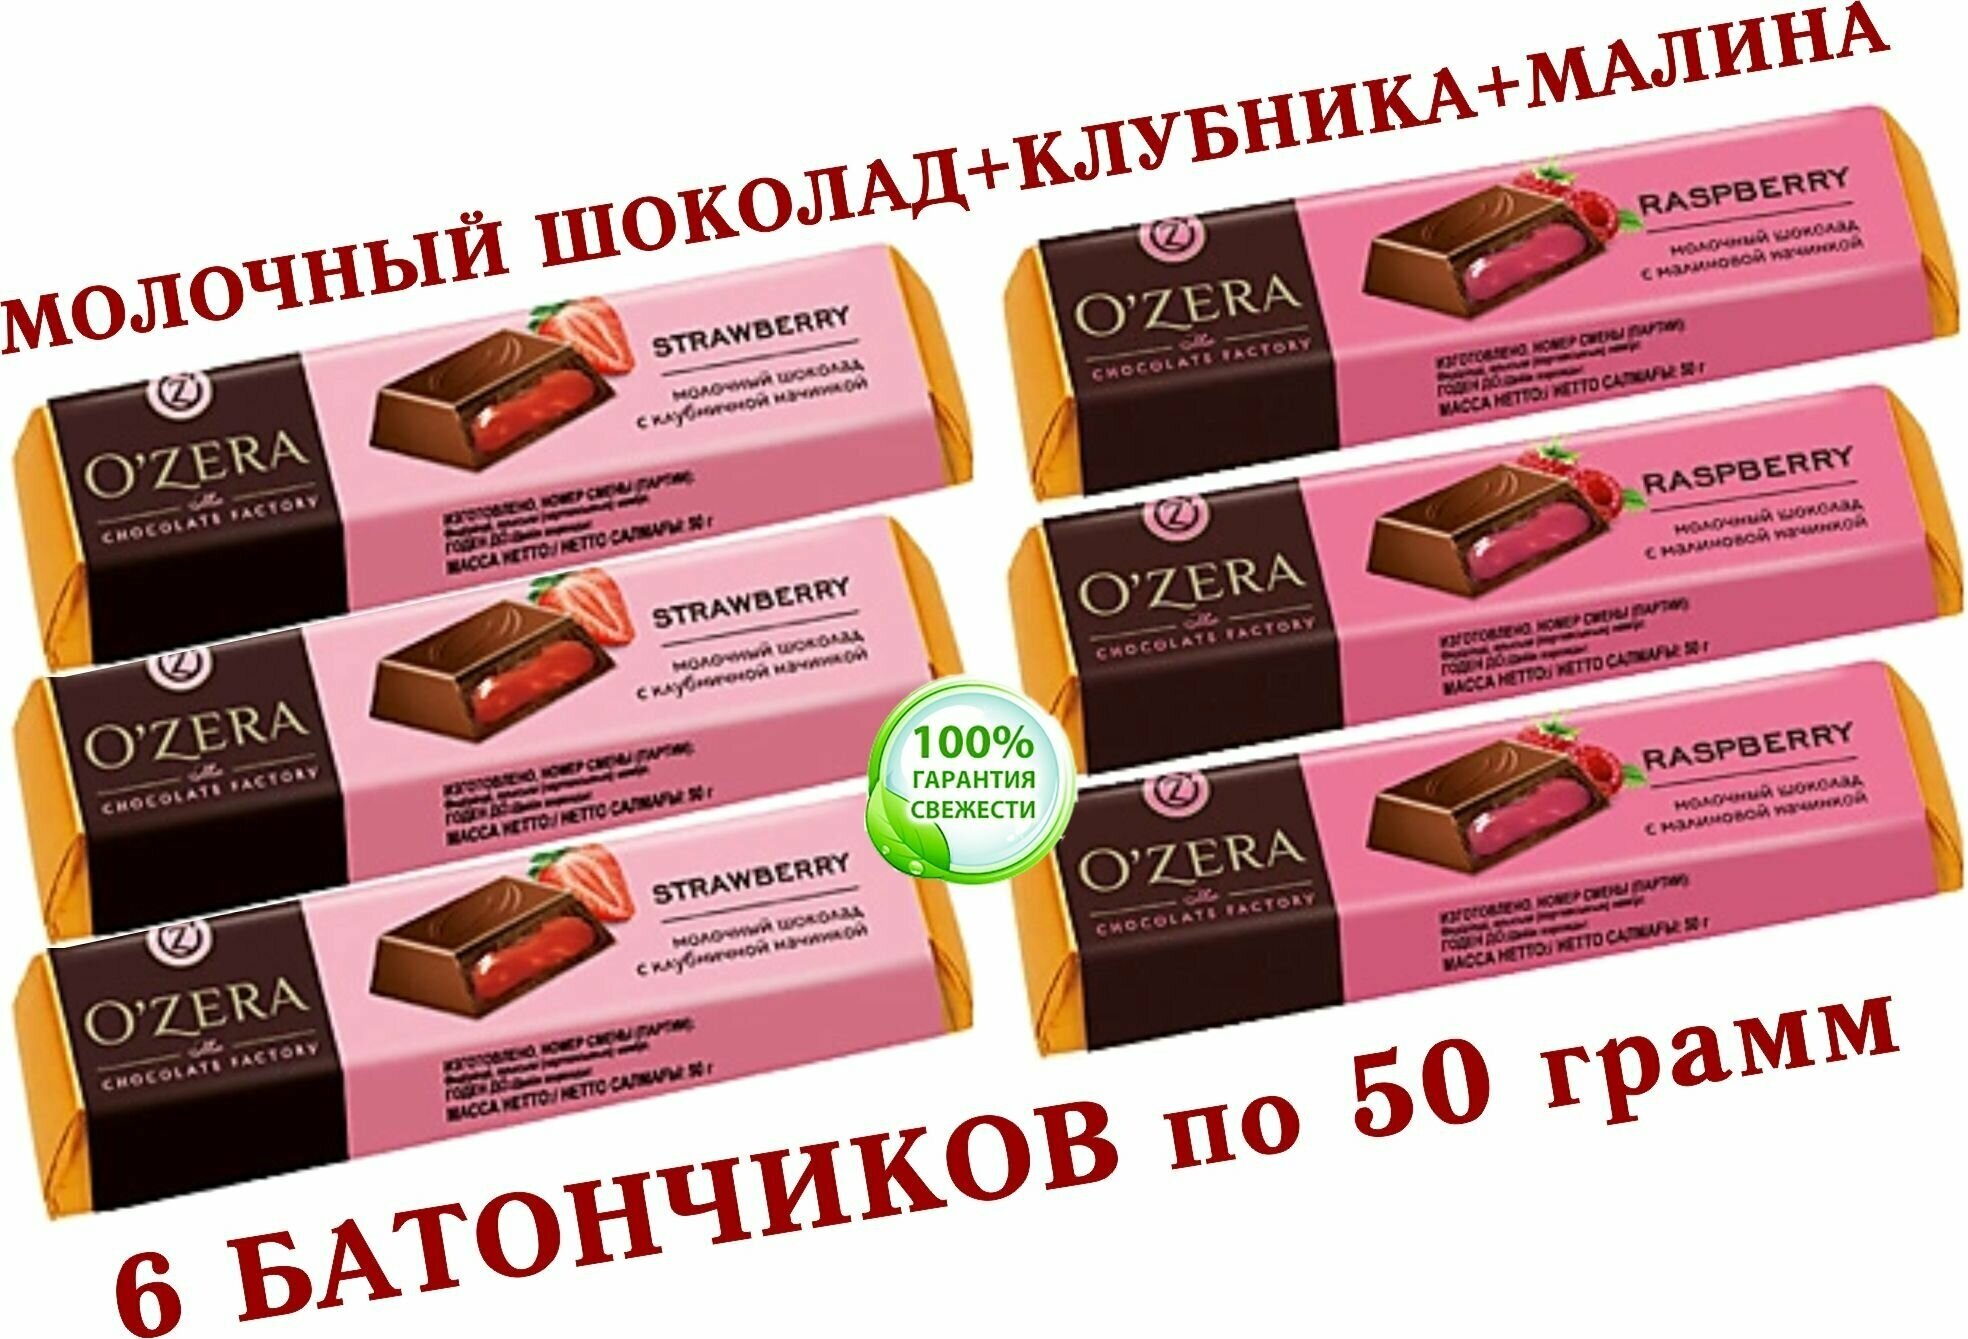 Шоколадный батончик OZera микс клубника "Strawberry"/малина "Raspberry" КDV "Озёрский сувенир" - 6 штук по 50 грамм